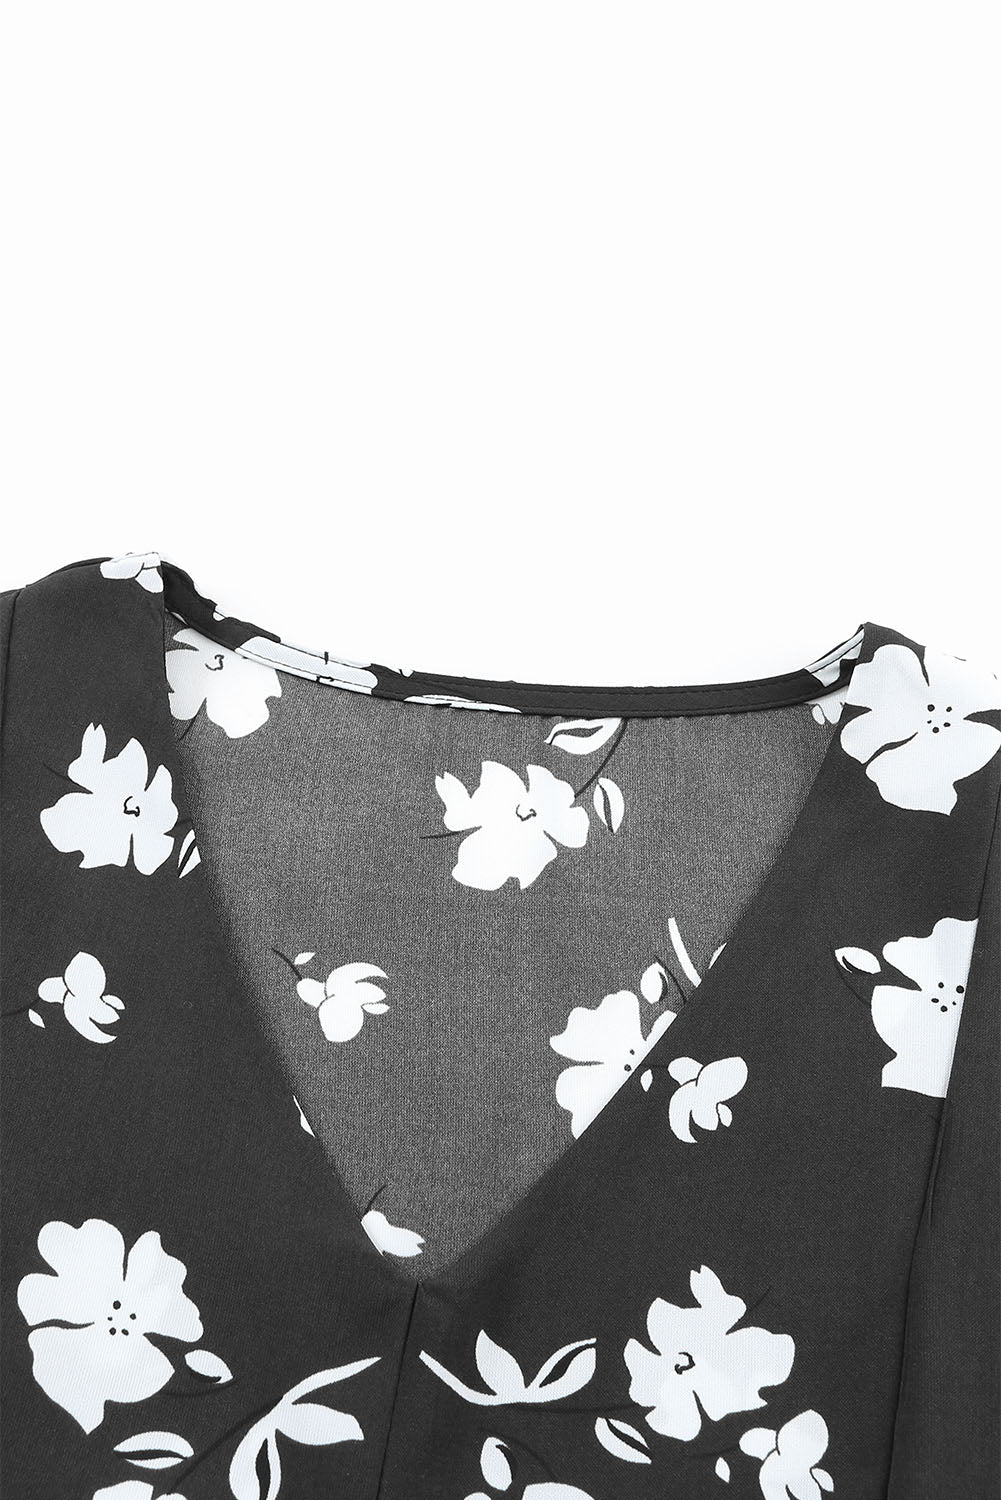 Khaki Floral Print V Neck Empire Waist Dress with Pockets